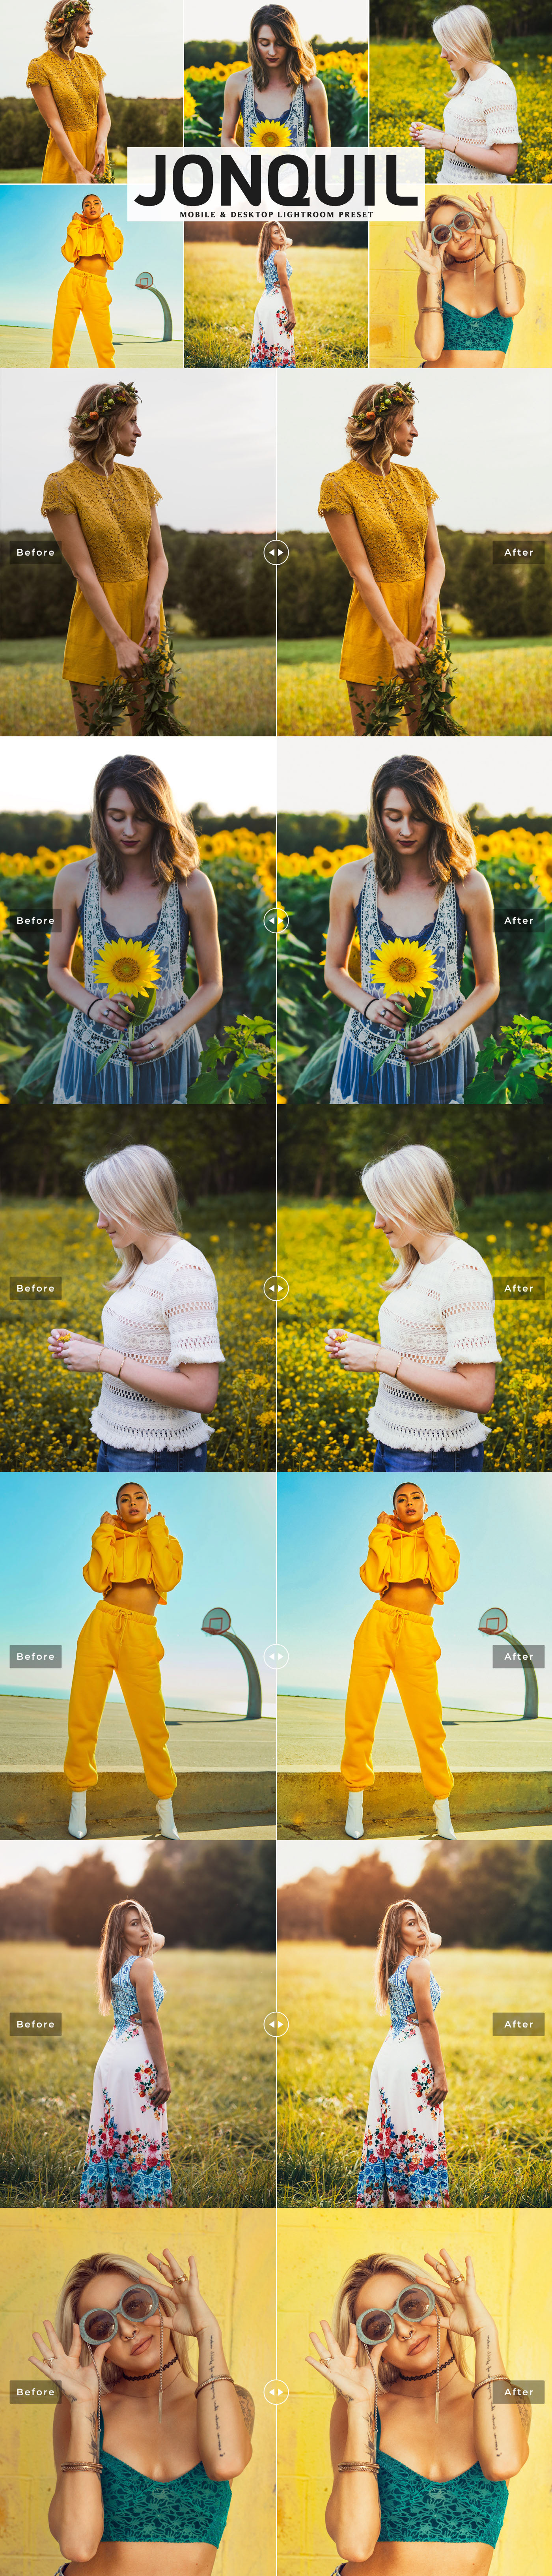 android preset color preset creative preset Instagram preset iphone preset blogger preset impressive tone lightroom preset mobile preset portrait preset